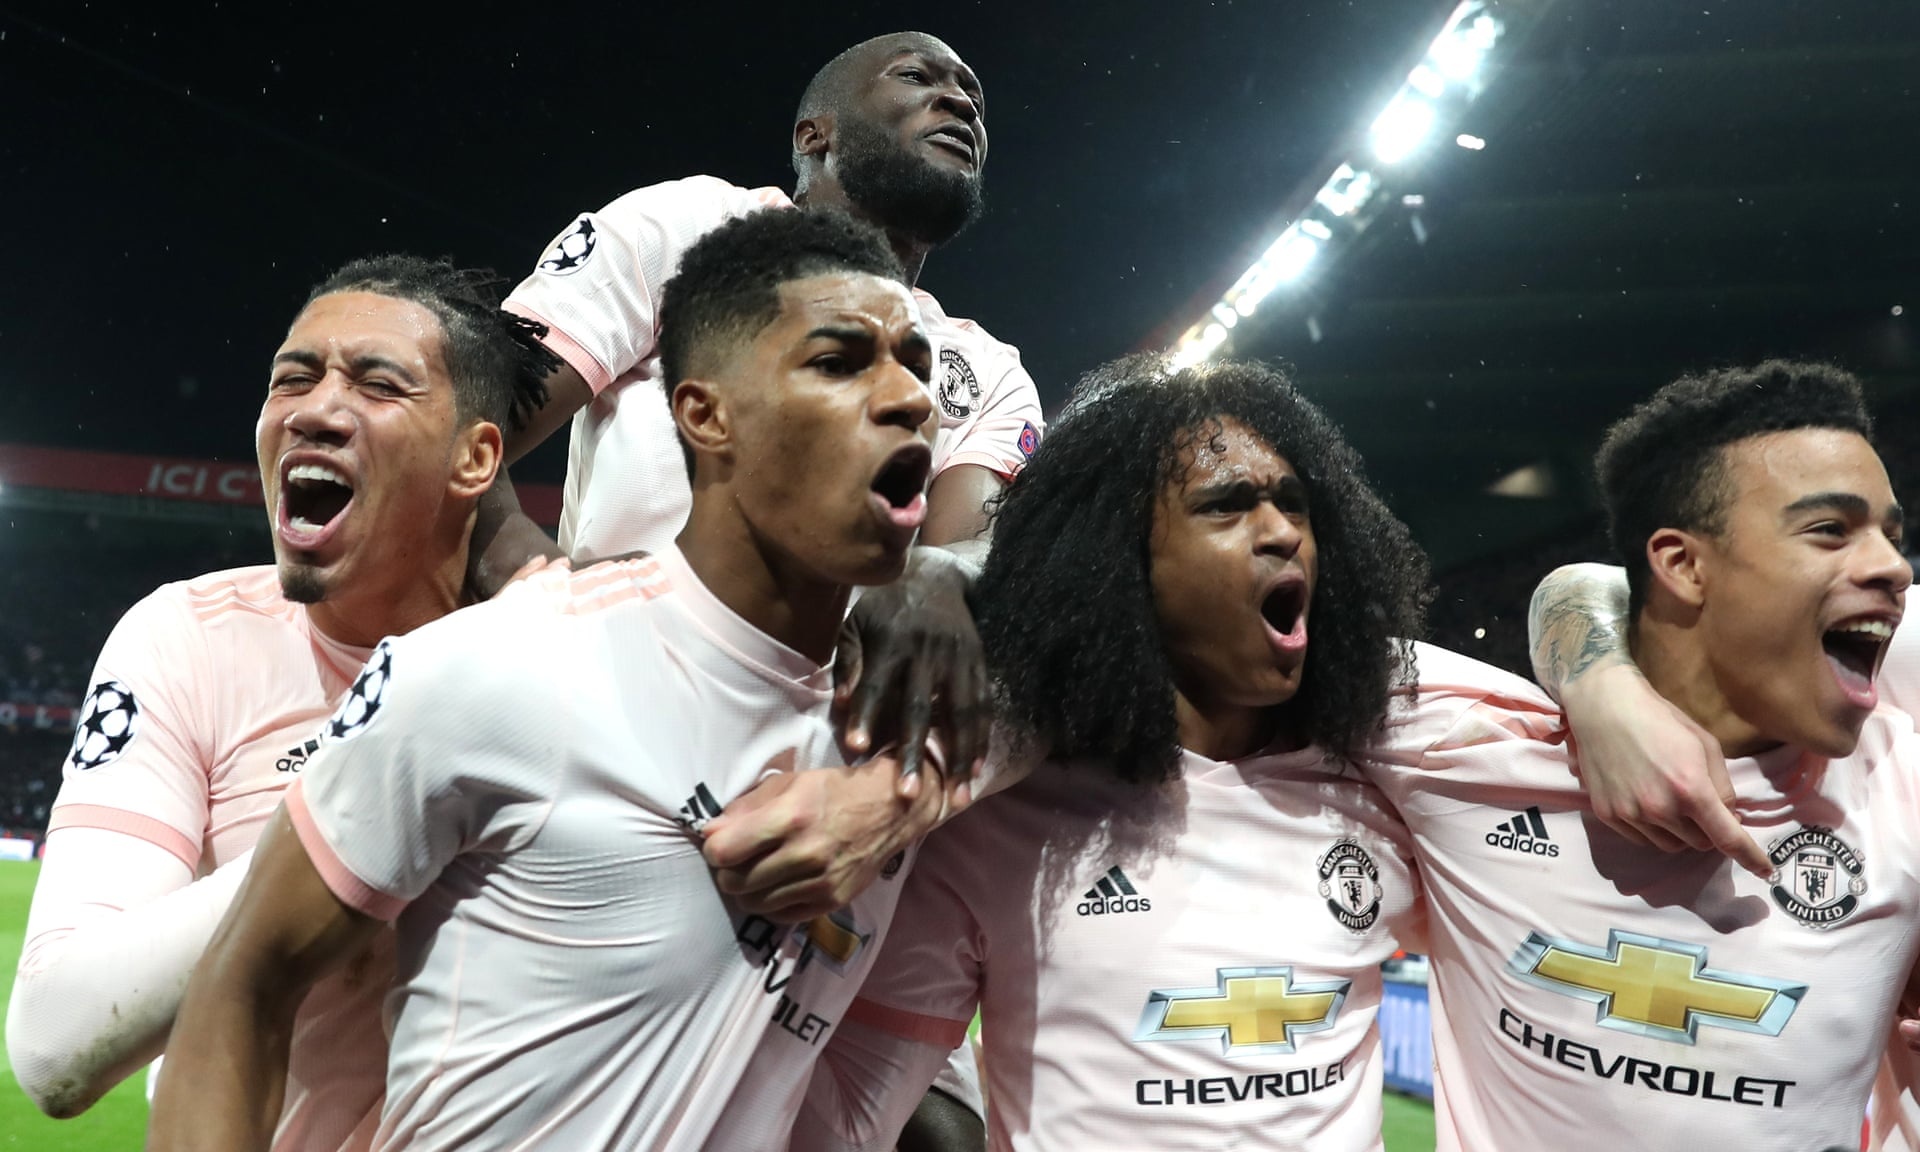 wp image 447832 - Llora París, el Manchester United se llevó el triunfo en la Champions League